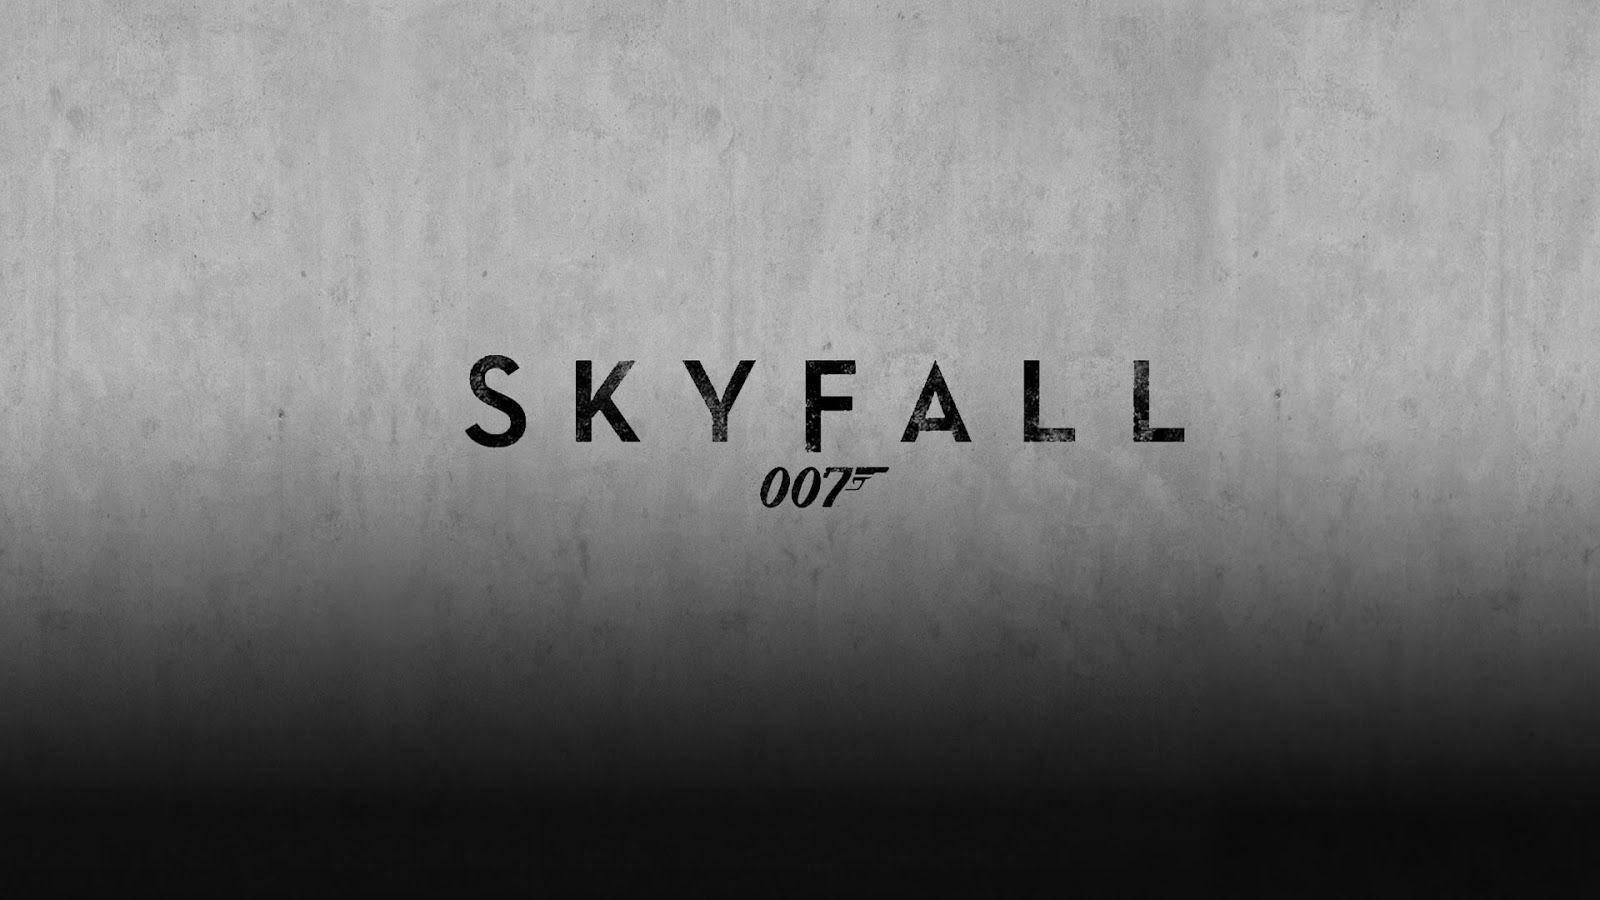 James Bond Skyfall Gray Poster Background